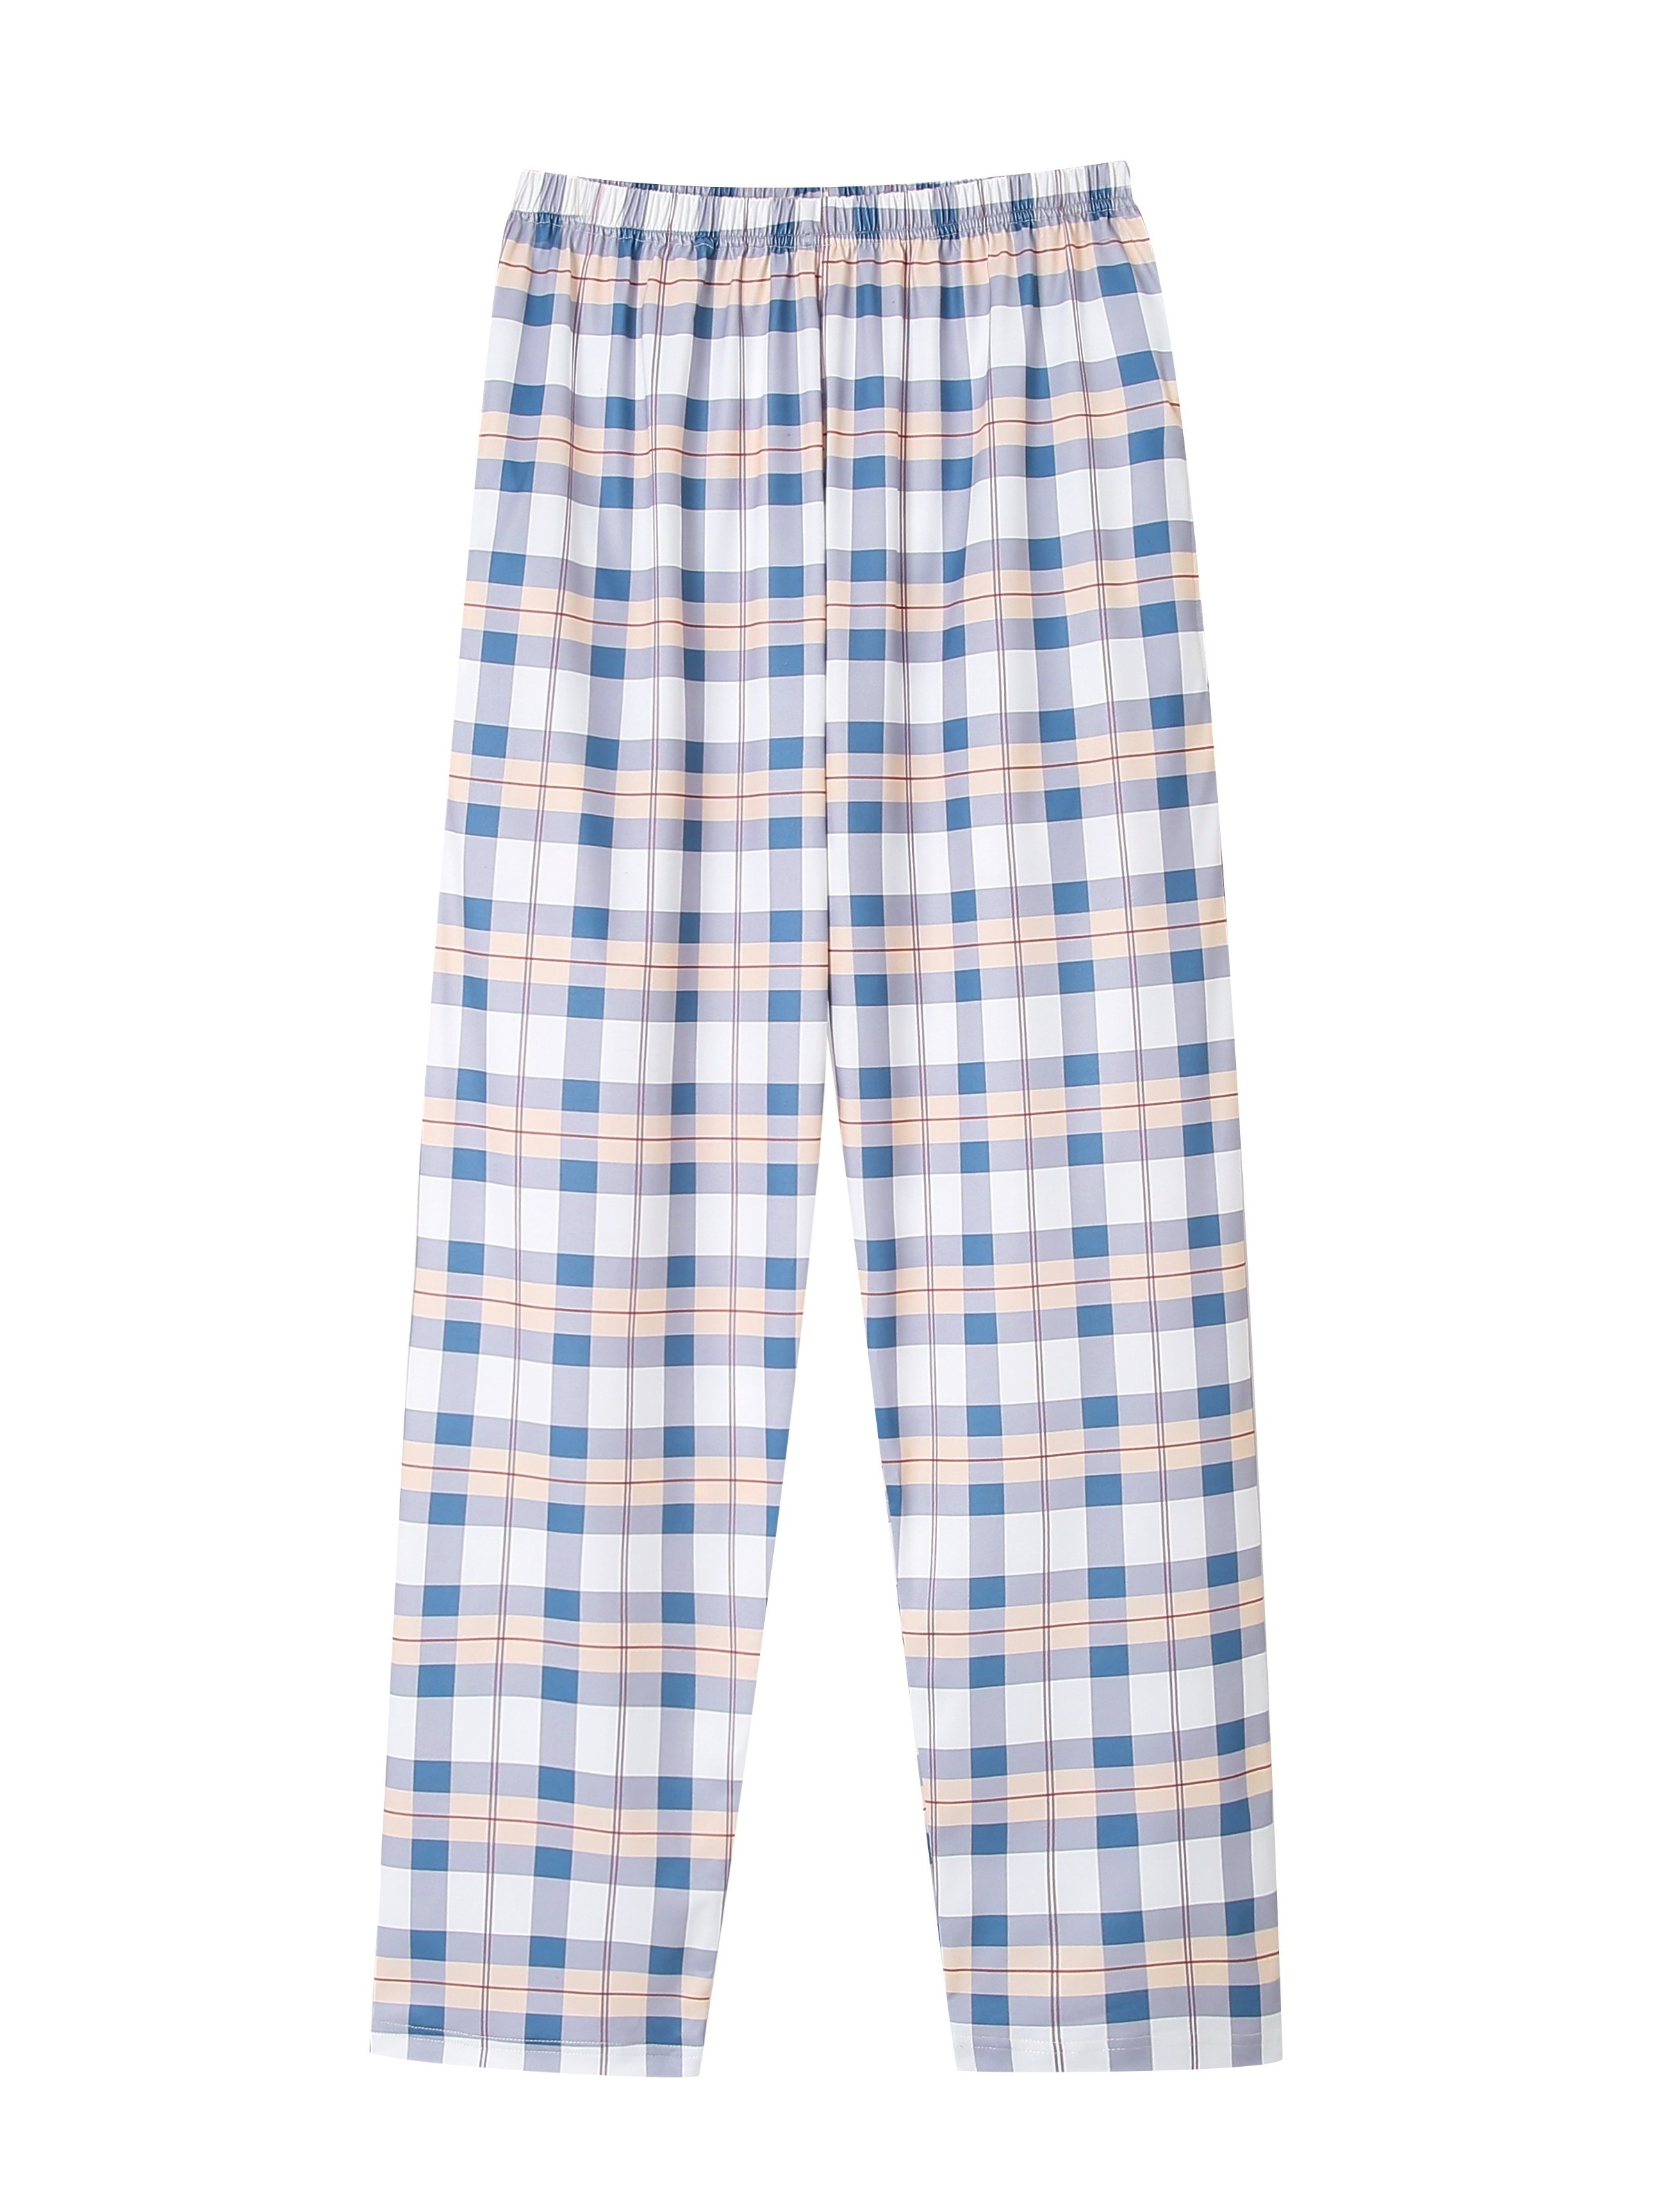 100% Cotton Plaid Pajama Pants for Women- Soft Comfortable Casual Loose Sleepwear  Ladies Lounge Wear Pants(Light Gray) 